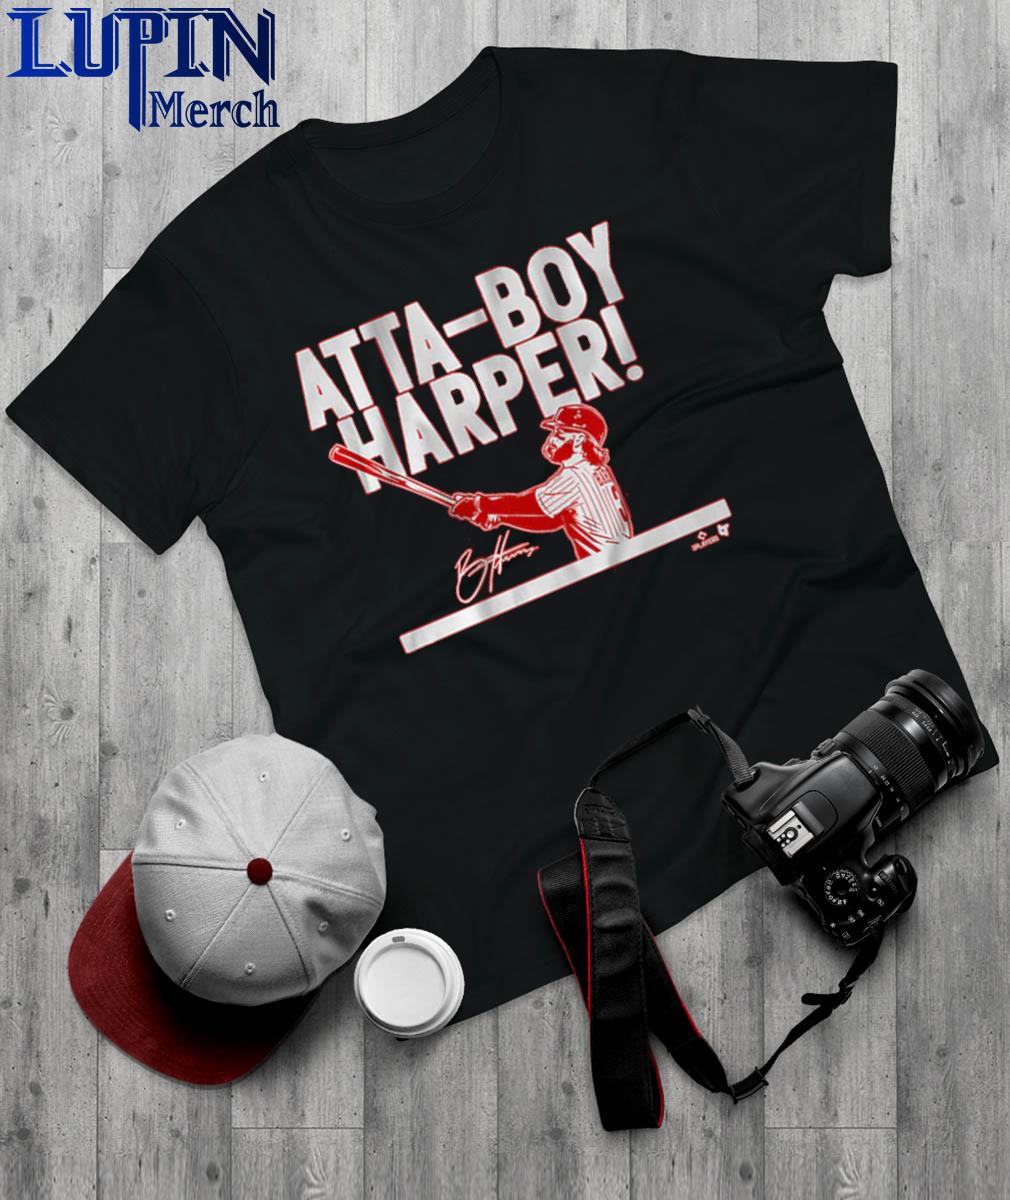 Harper Atta Boy Harper Baseball Unisex Shirt T-shirt Funny 